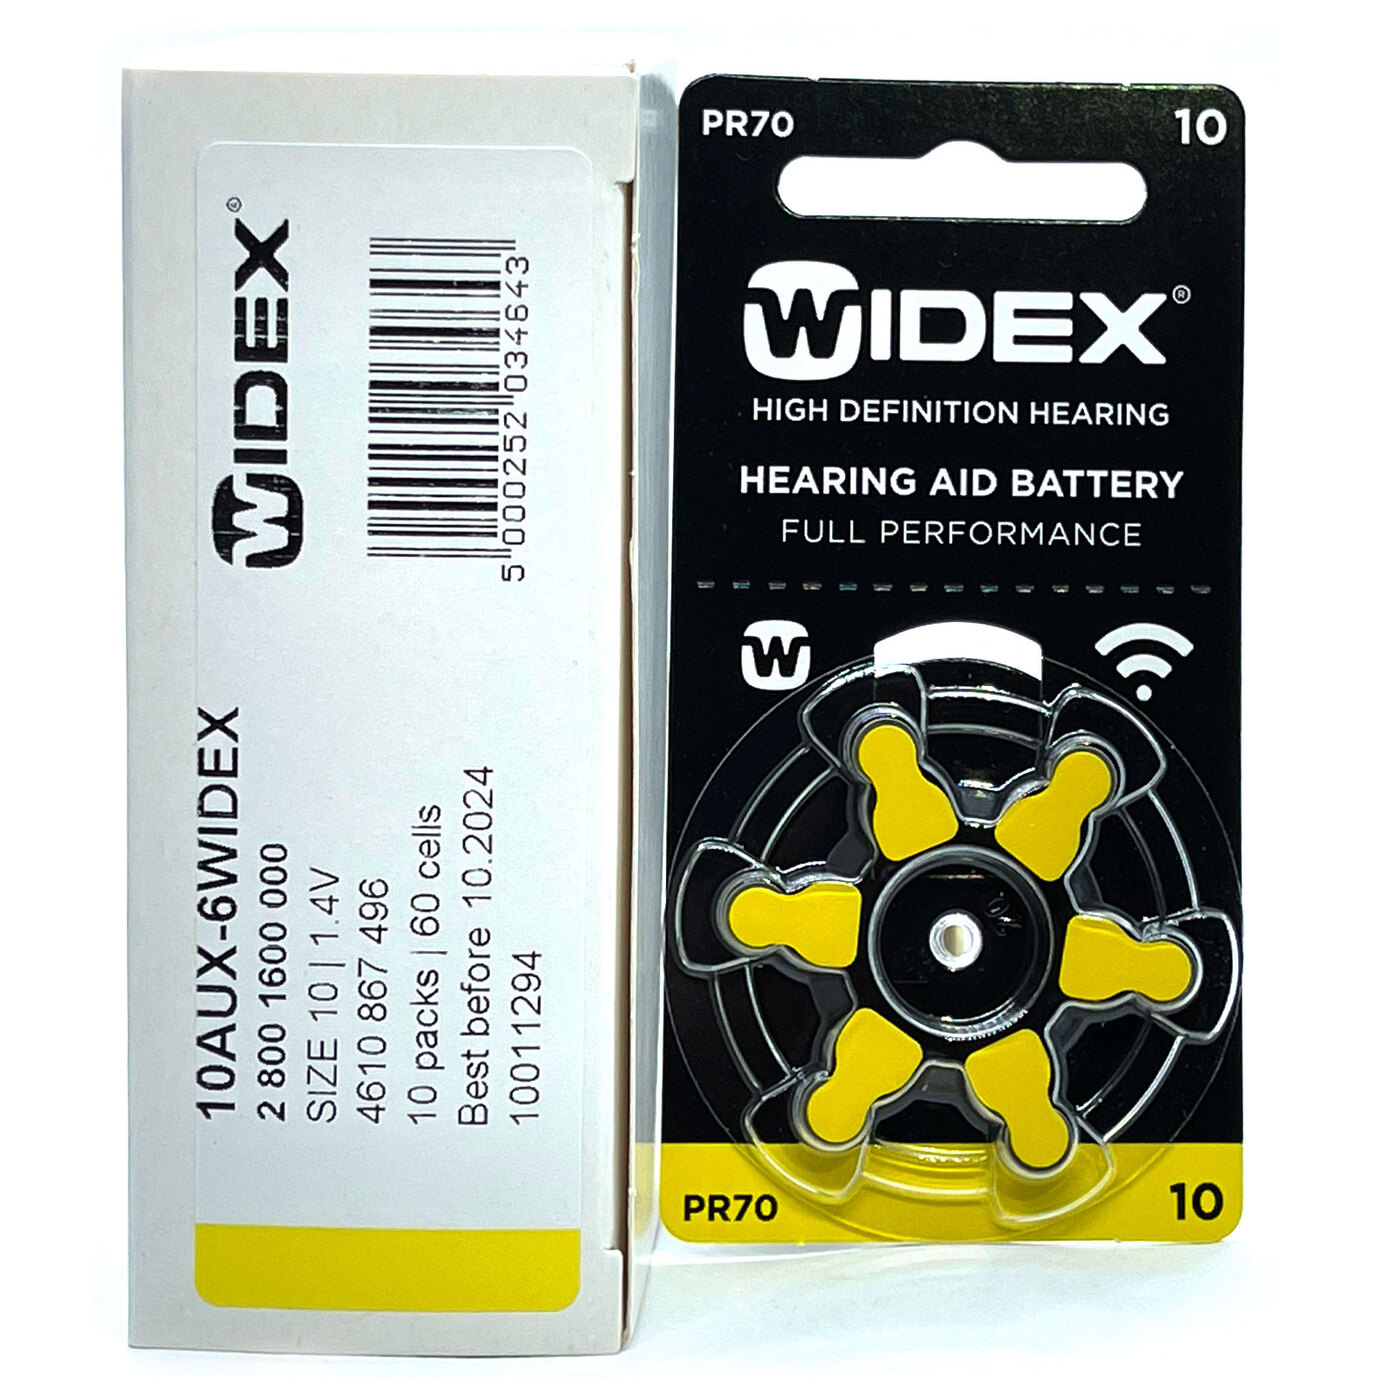 26 10 70. Батарейка SMARTBUY za10 pr70 для слуховых апп bl1/6. Батарейки для слухового аппарата 312 Видекс. Батарейки для слуховых аппаратов 312 Widex pr41. Индикатор батареек для слухового аппарата Widex.